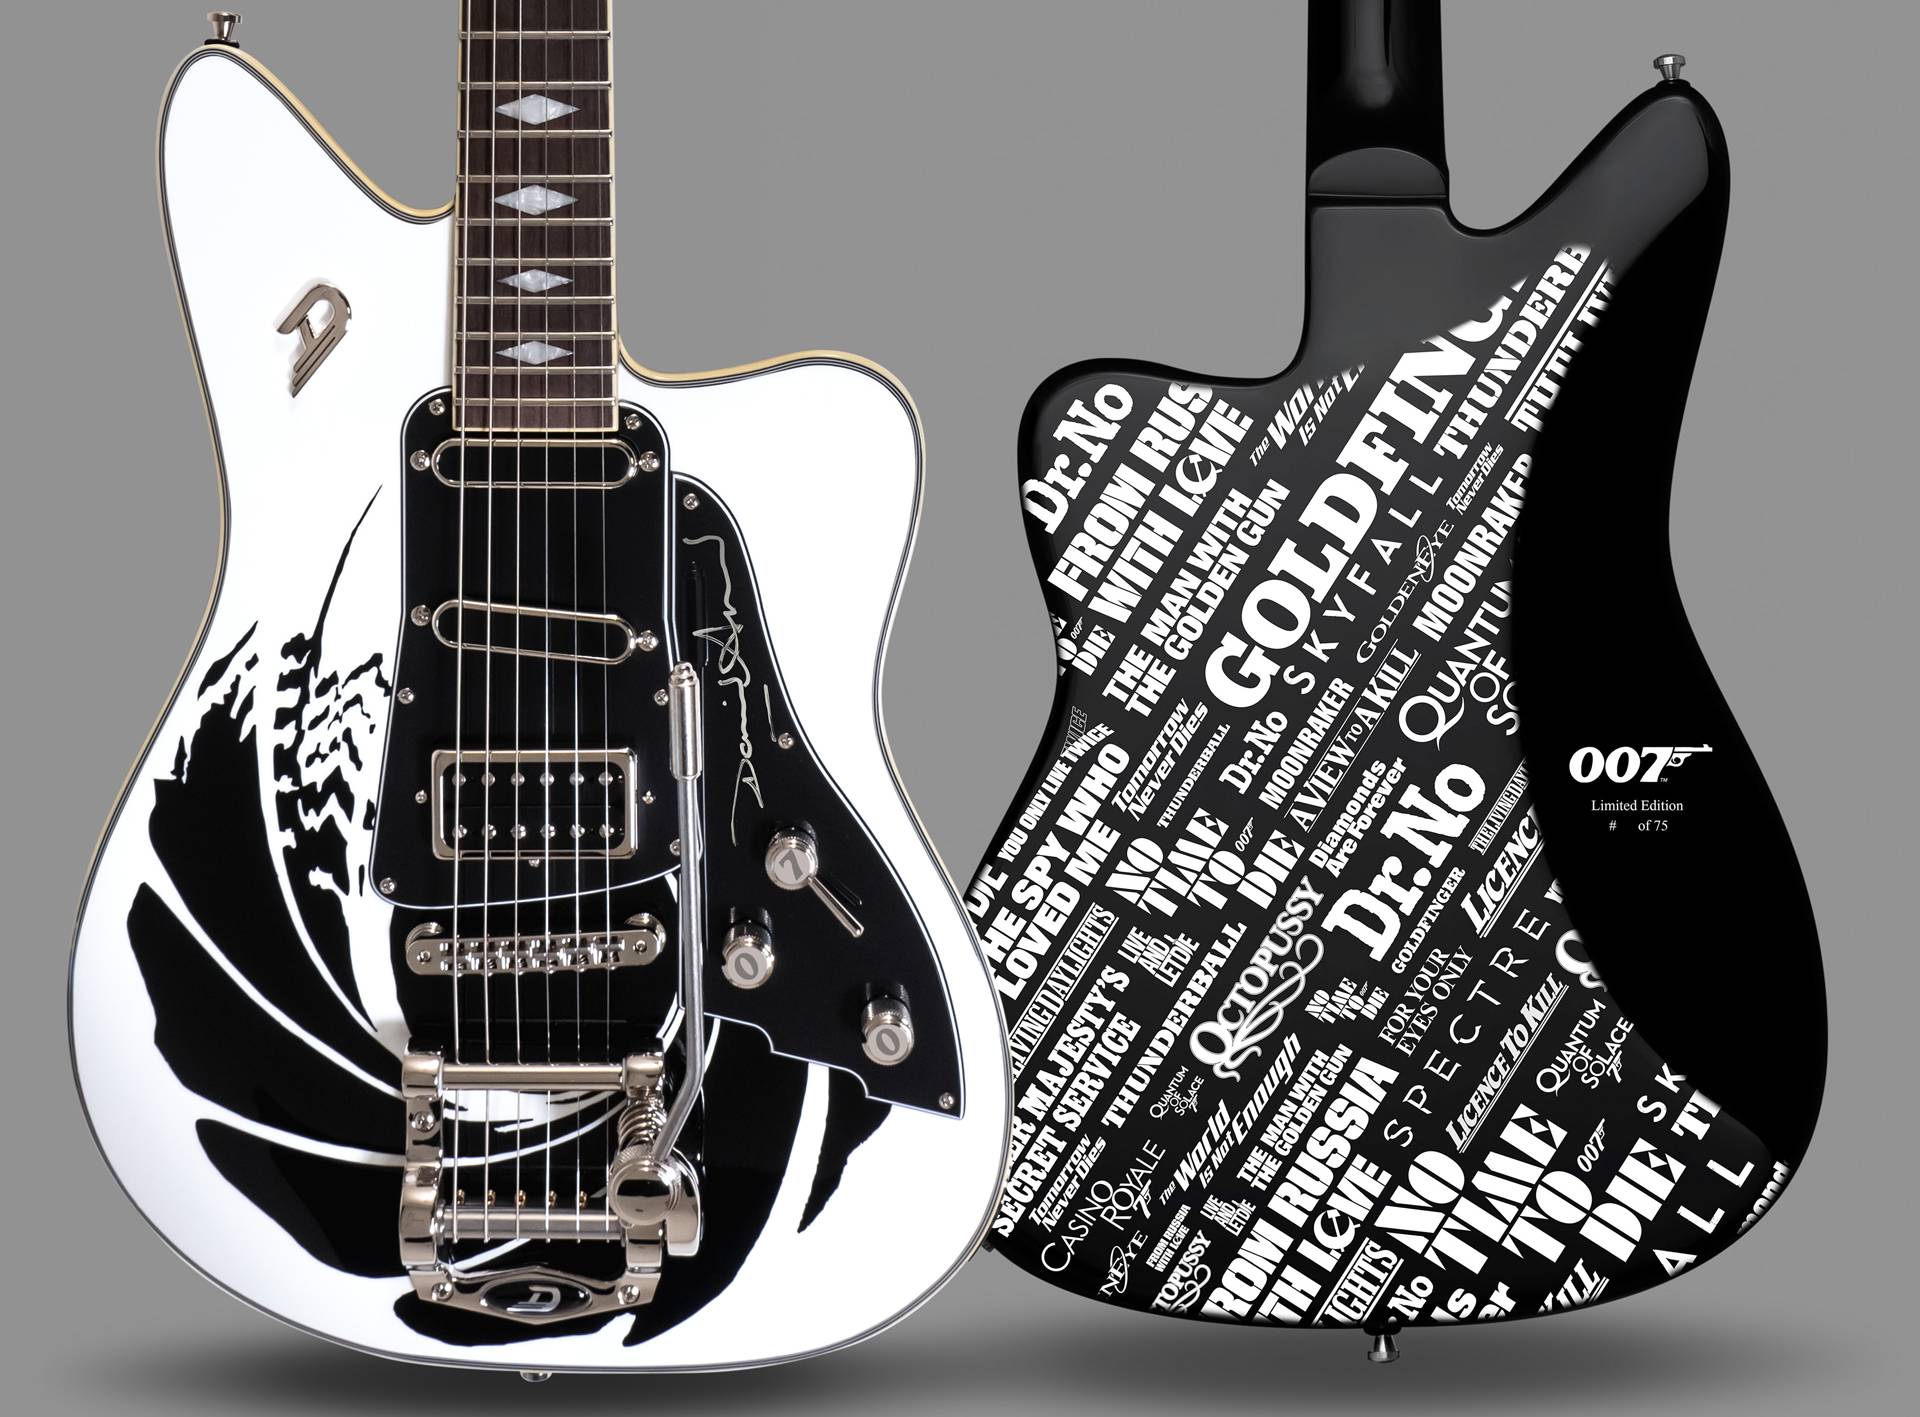 Duesenberg 007 David Arnold Edition Guitar Announced